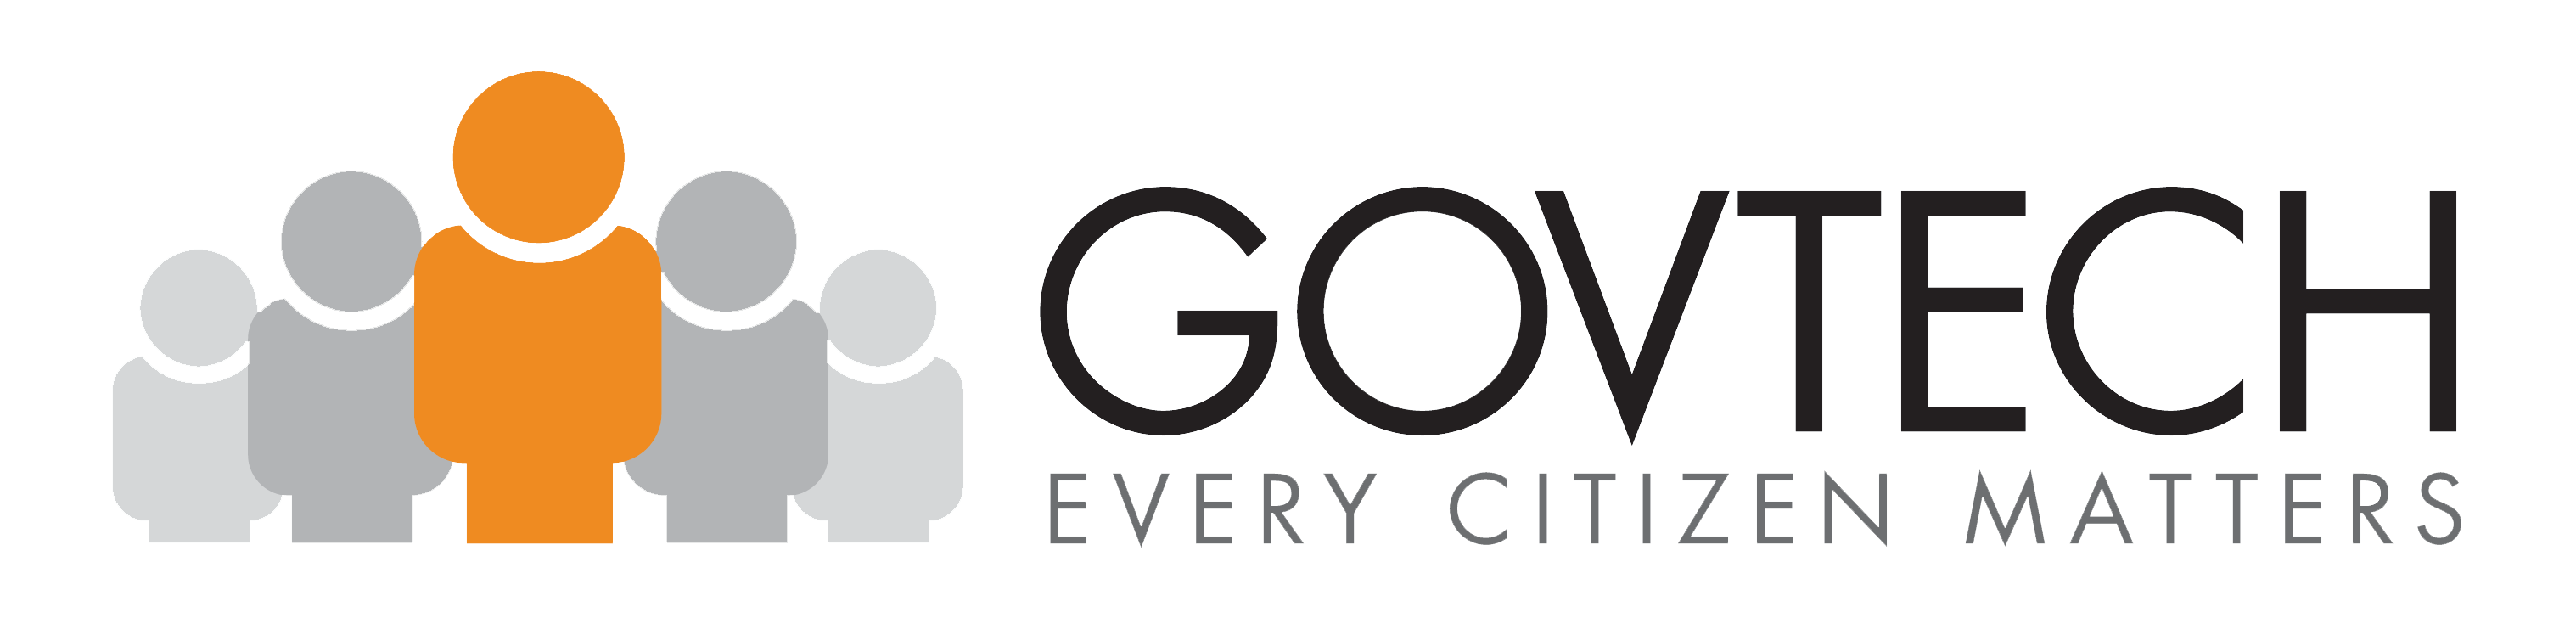 Govtech Solutions logo